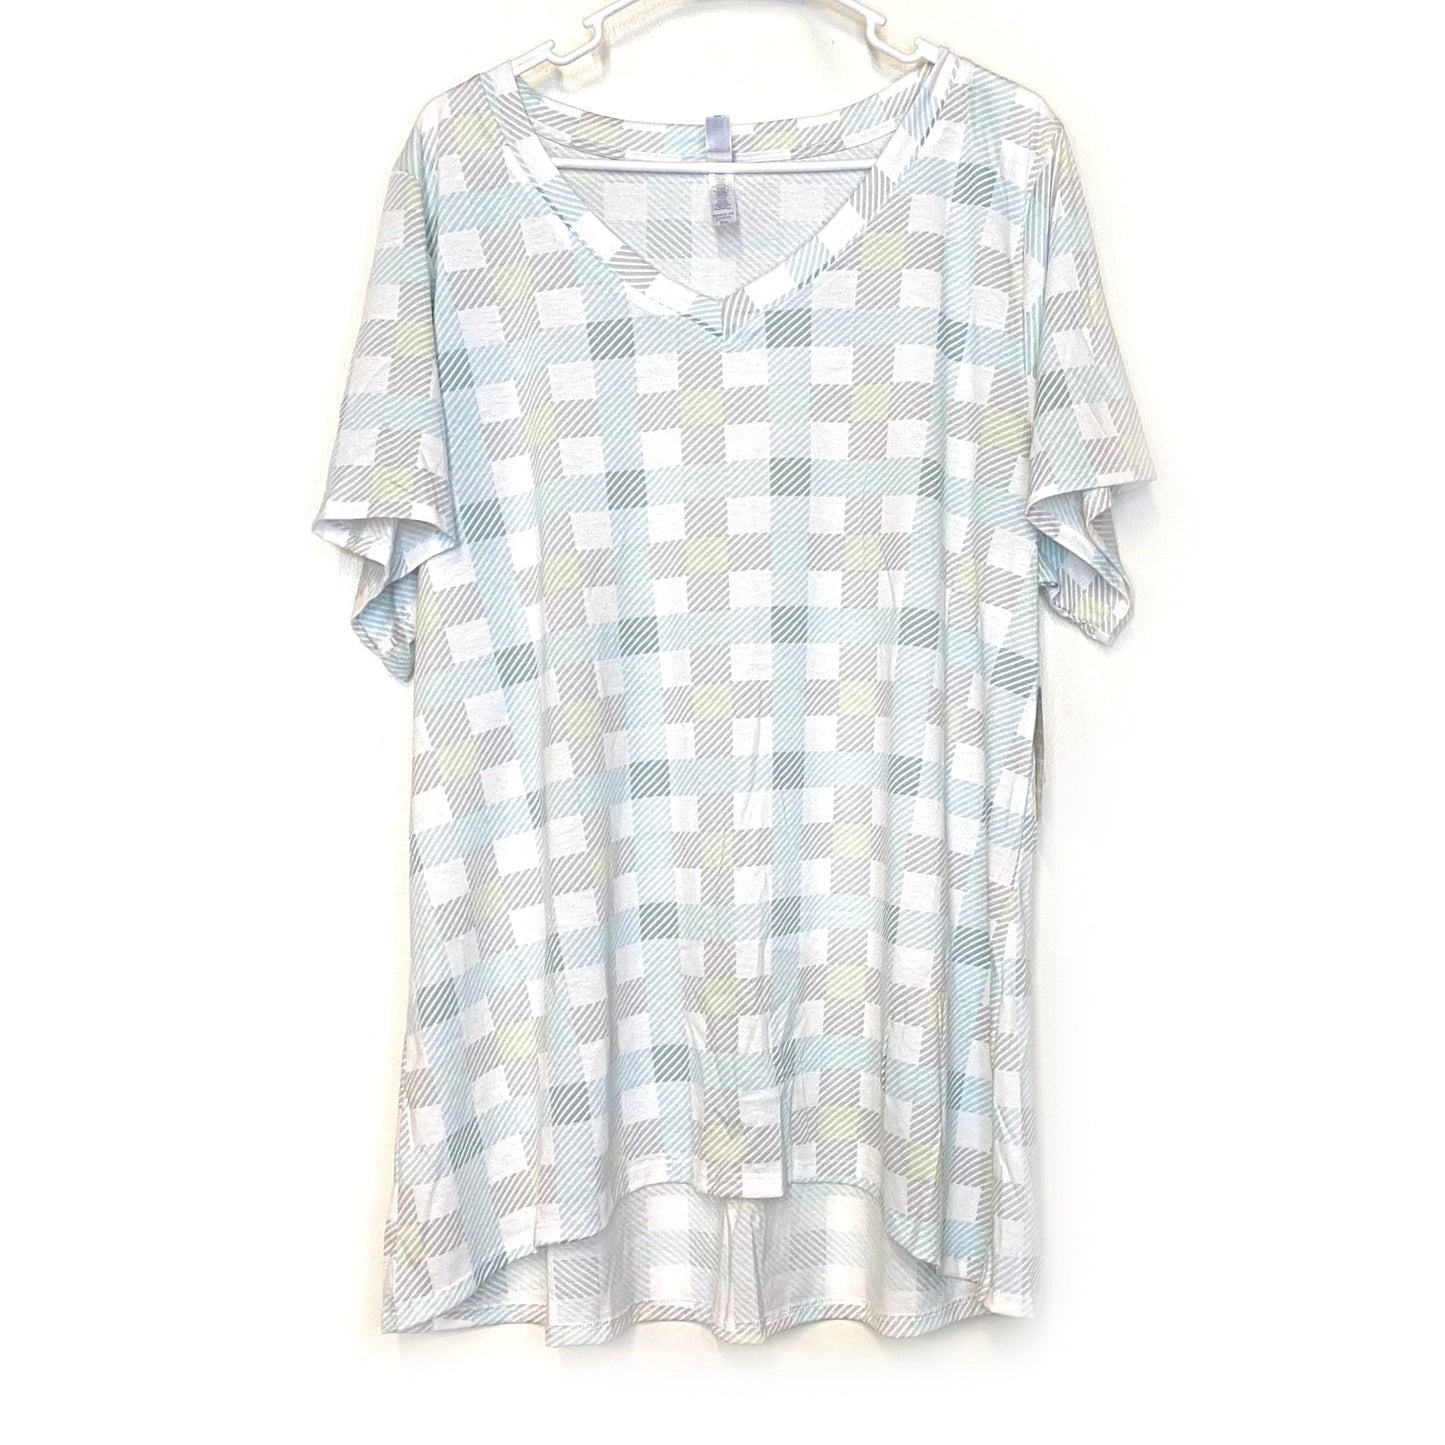 LuLaRoe Womens Size 3XL Gray/Blue Multicolor Christy T Plaid T-Shirt Shirt S/s NWT